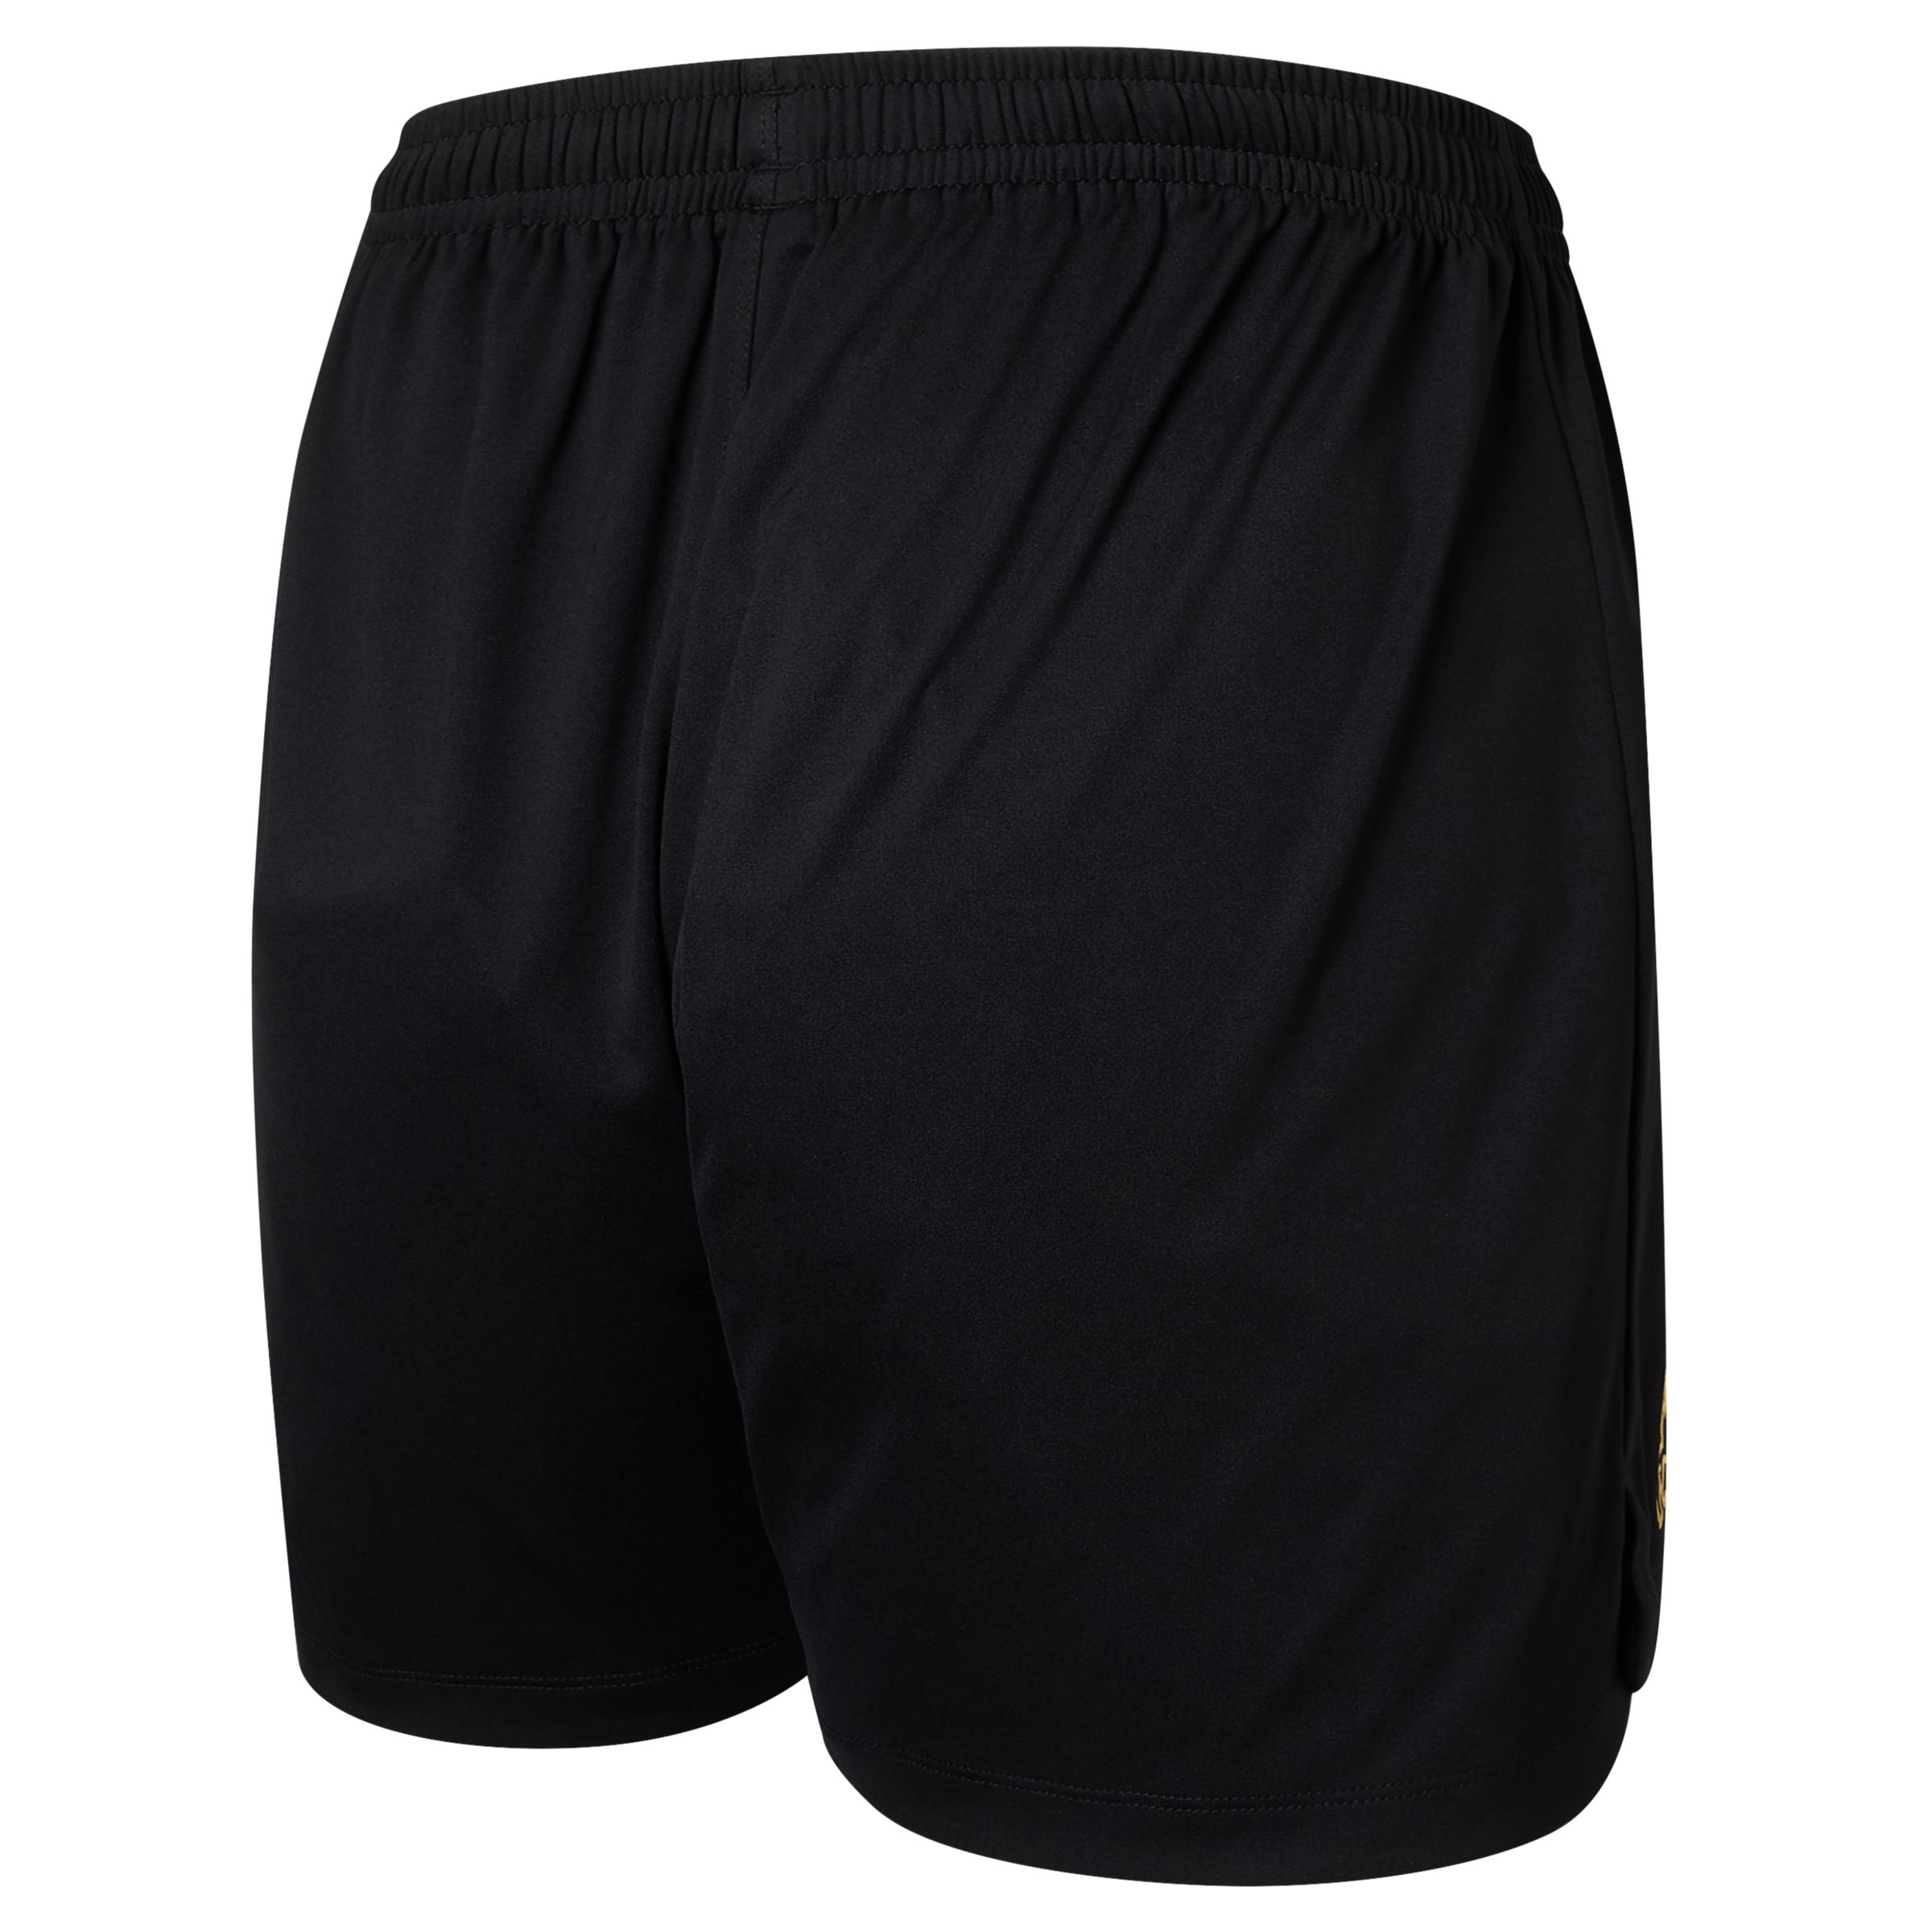 black liverpool shorts